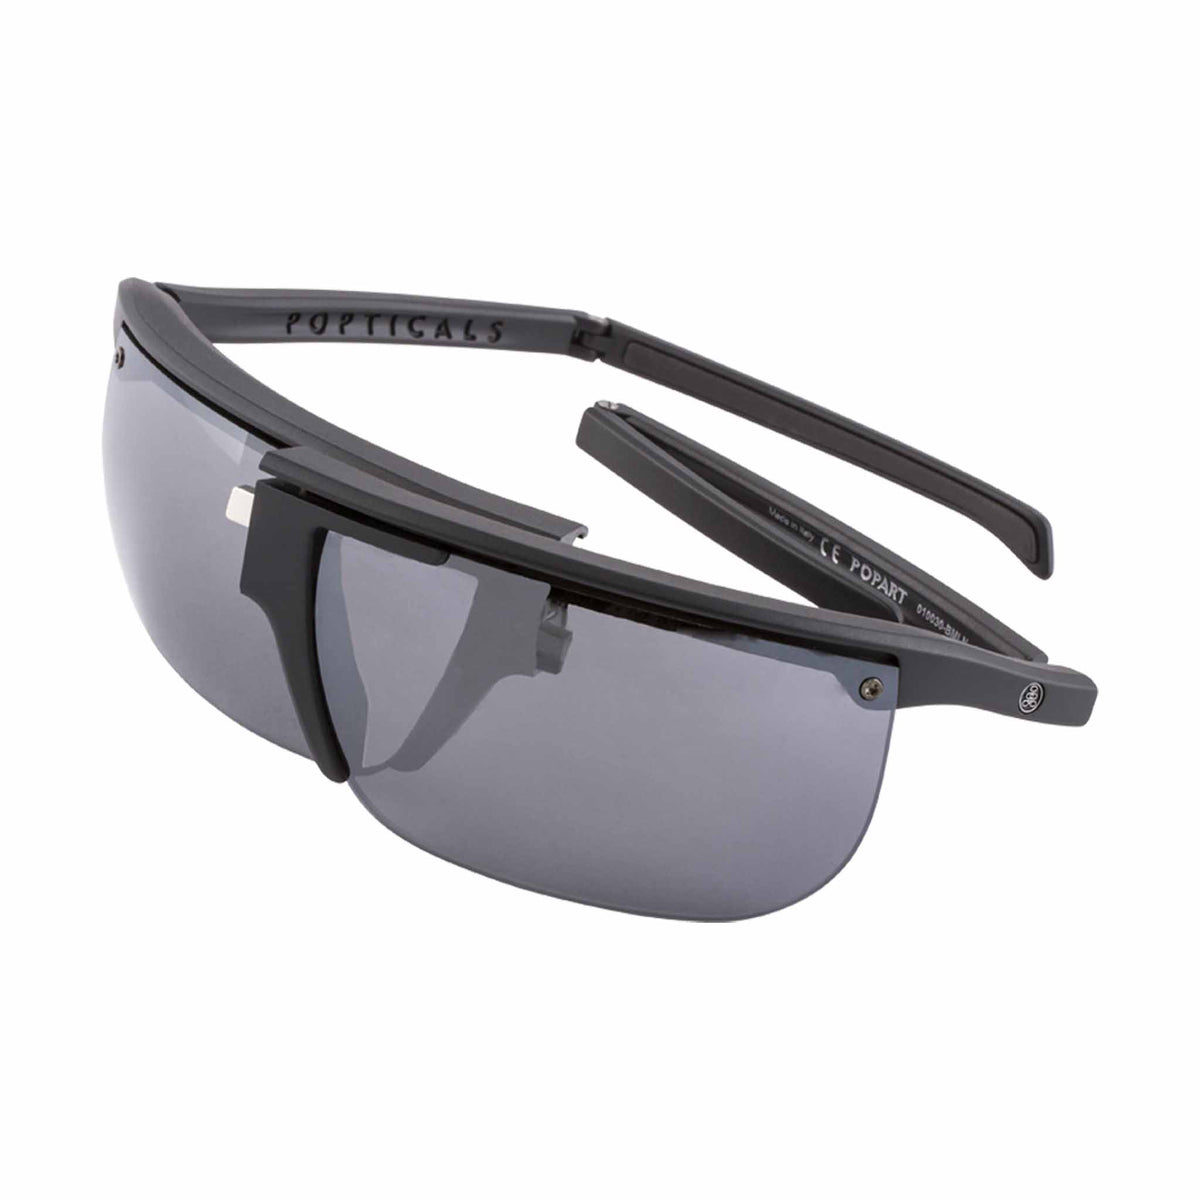 Popticals, Premium Compact Sunglasses, PopArt, 010030-BMLN, Polarized Sunglasses, Matte Black Frame, Gray Lenses with Silver Mirror Finish, Spider View